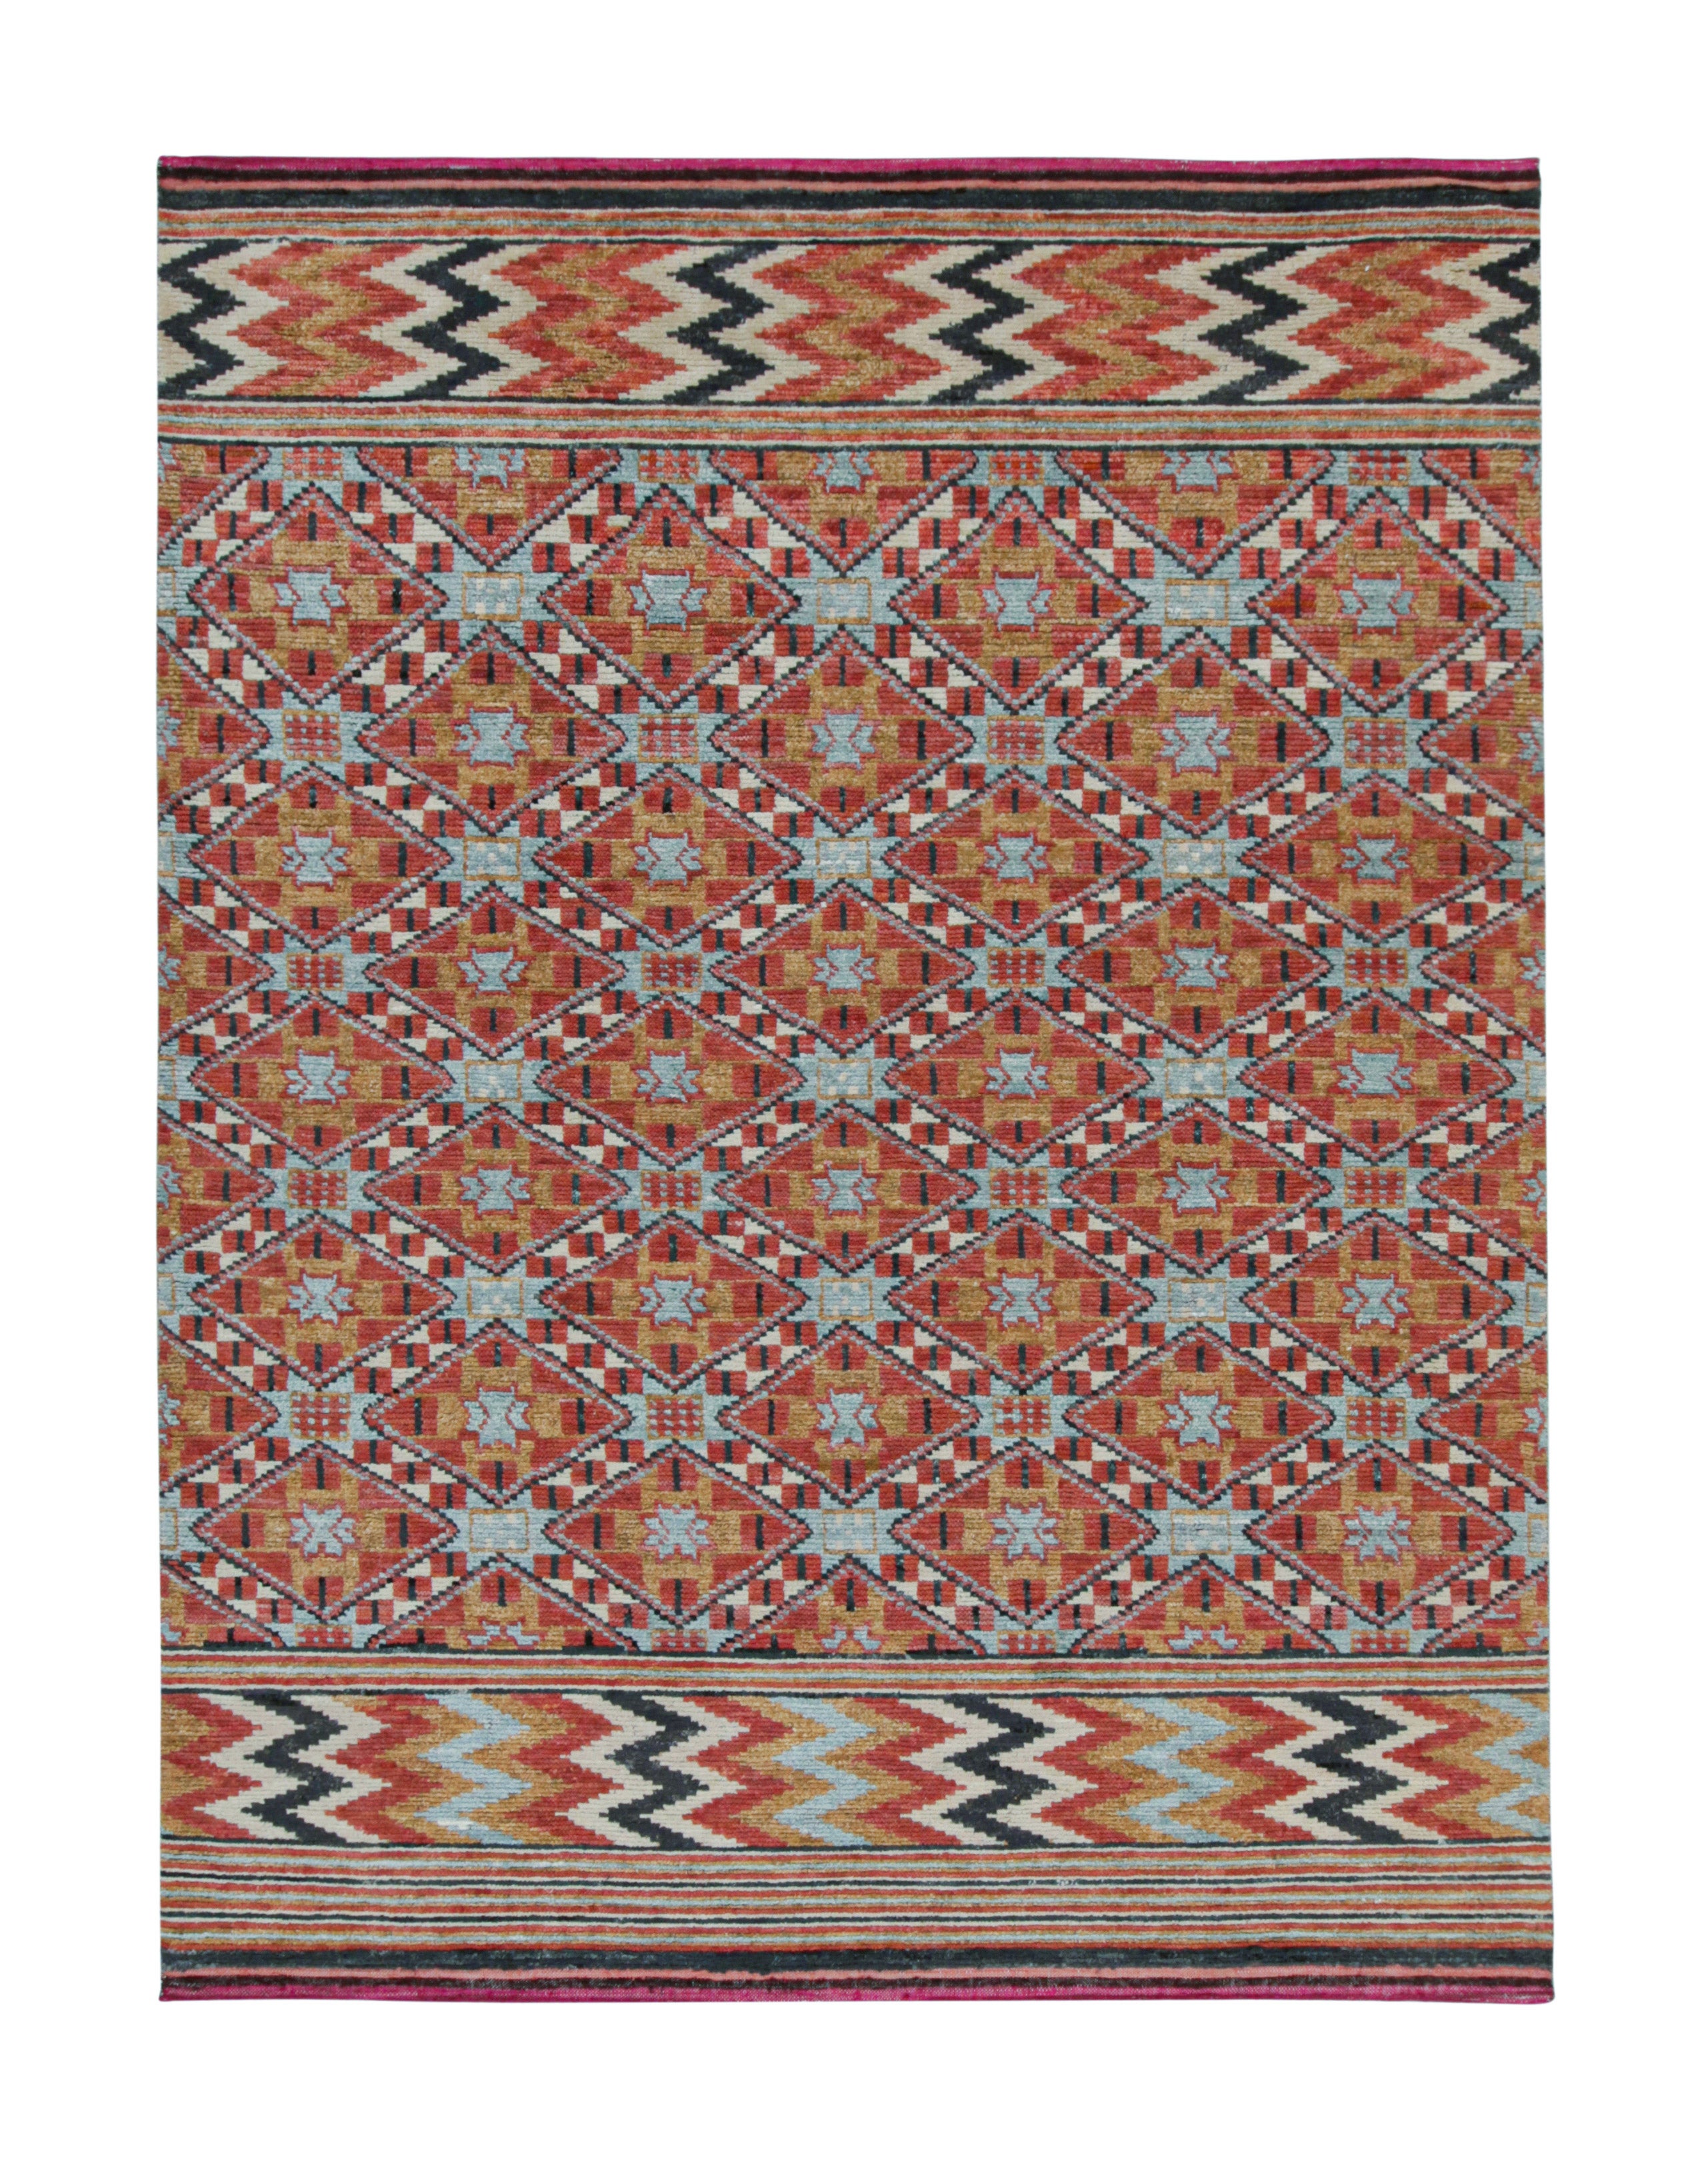 Rug & Kilim’s Moroccan Style Rug in Orange, Blue & Brown Geometric Pattern For Sale